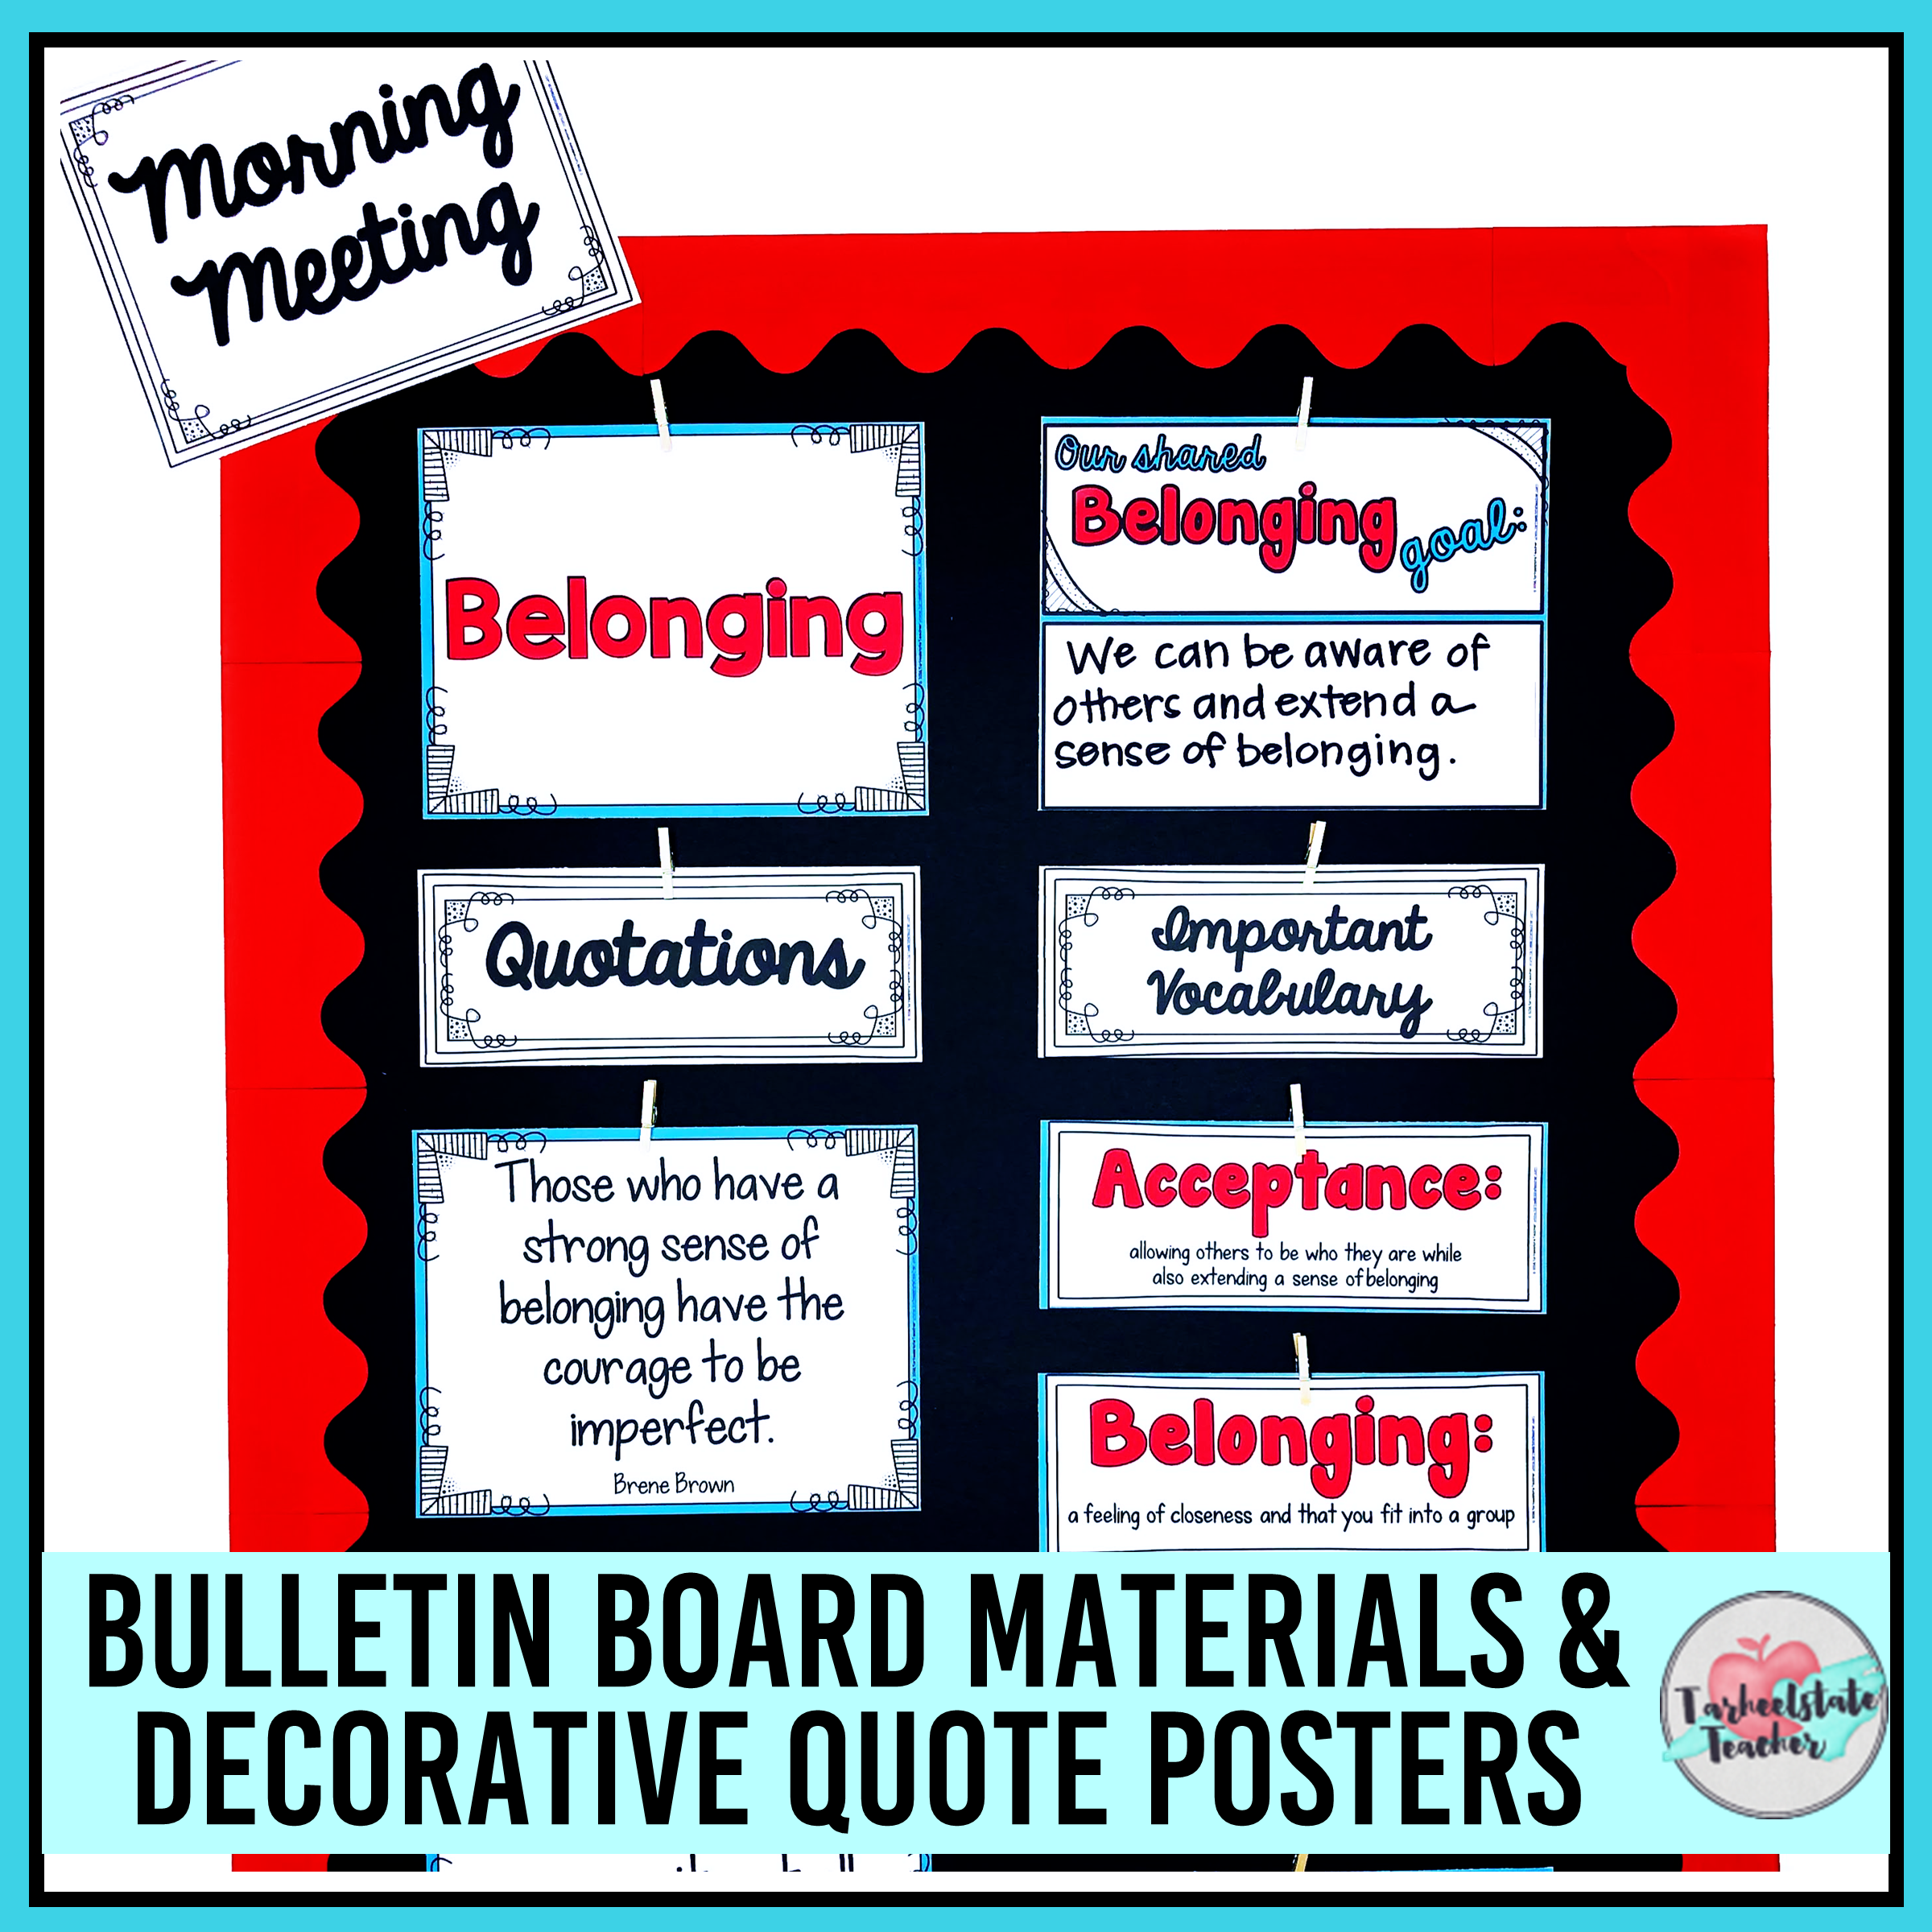 morning meeting bulletin board - belonging (Copy) (Copy) (Copy)